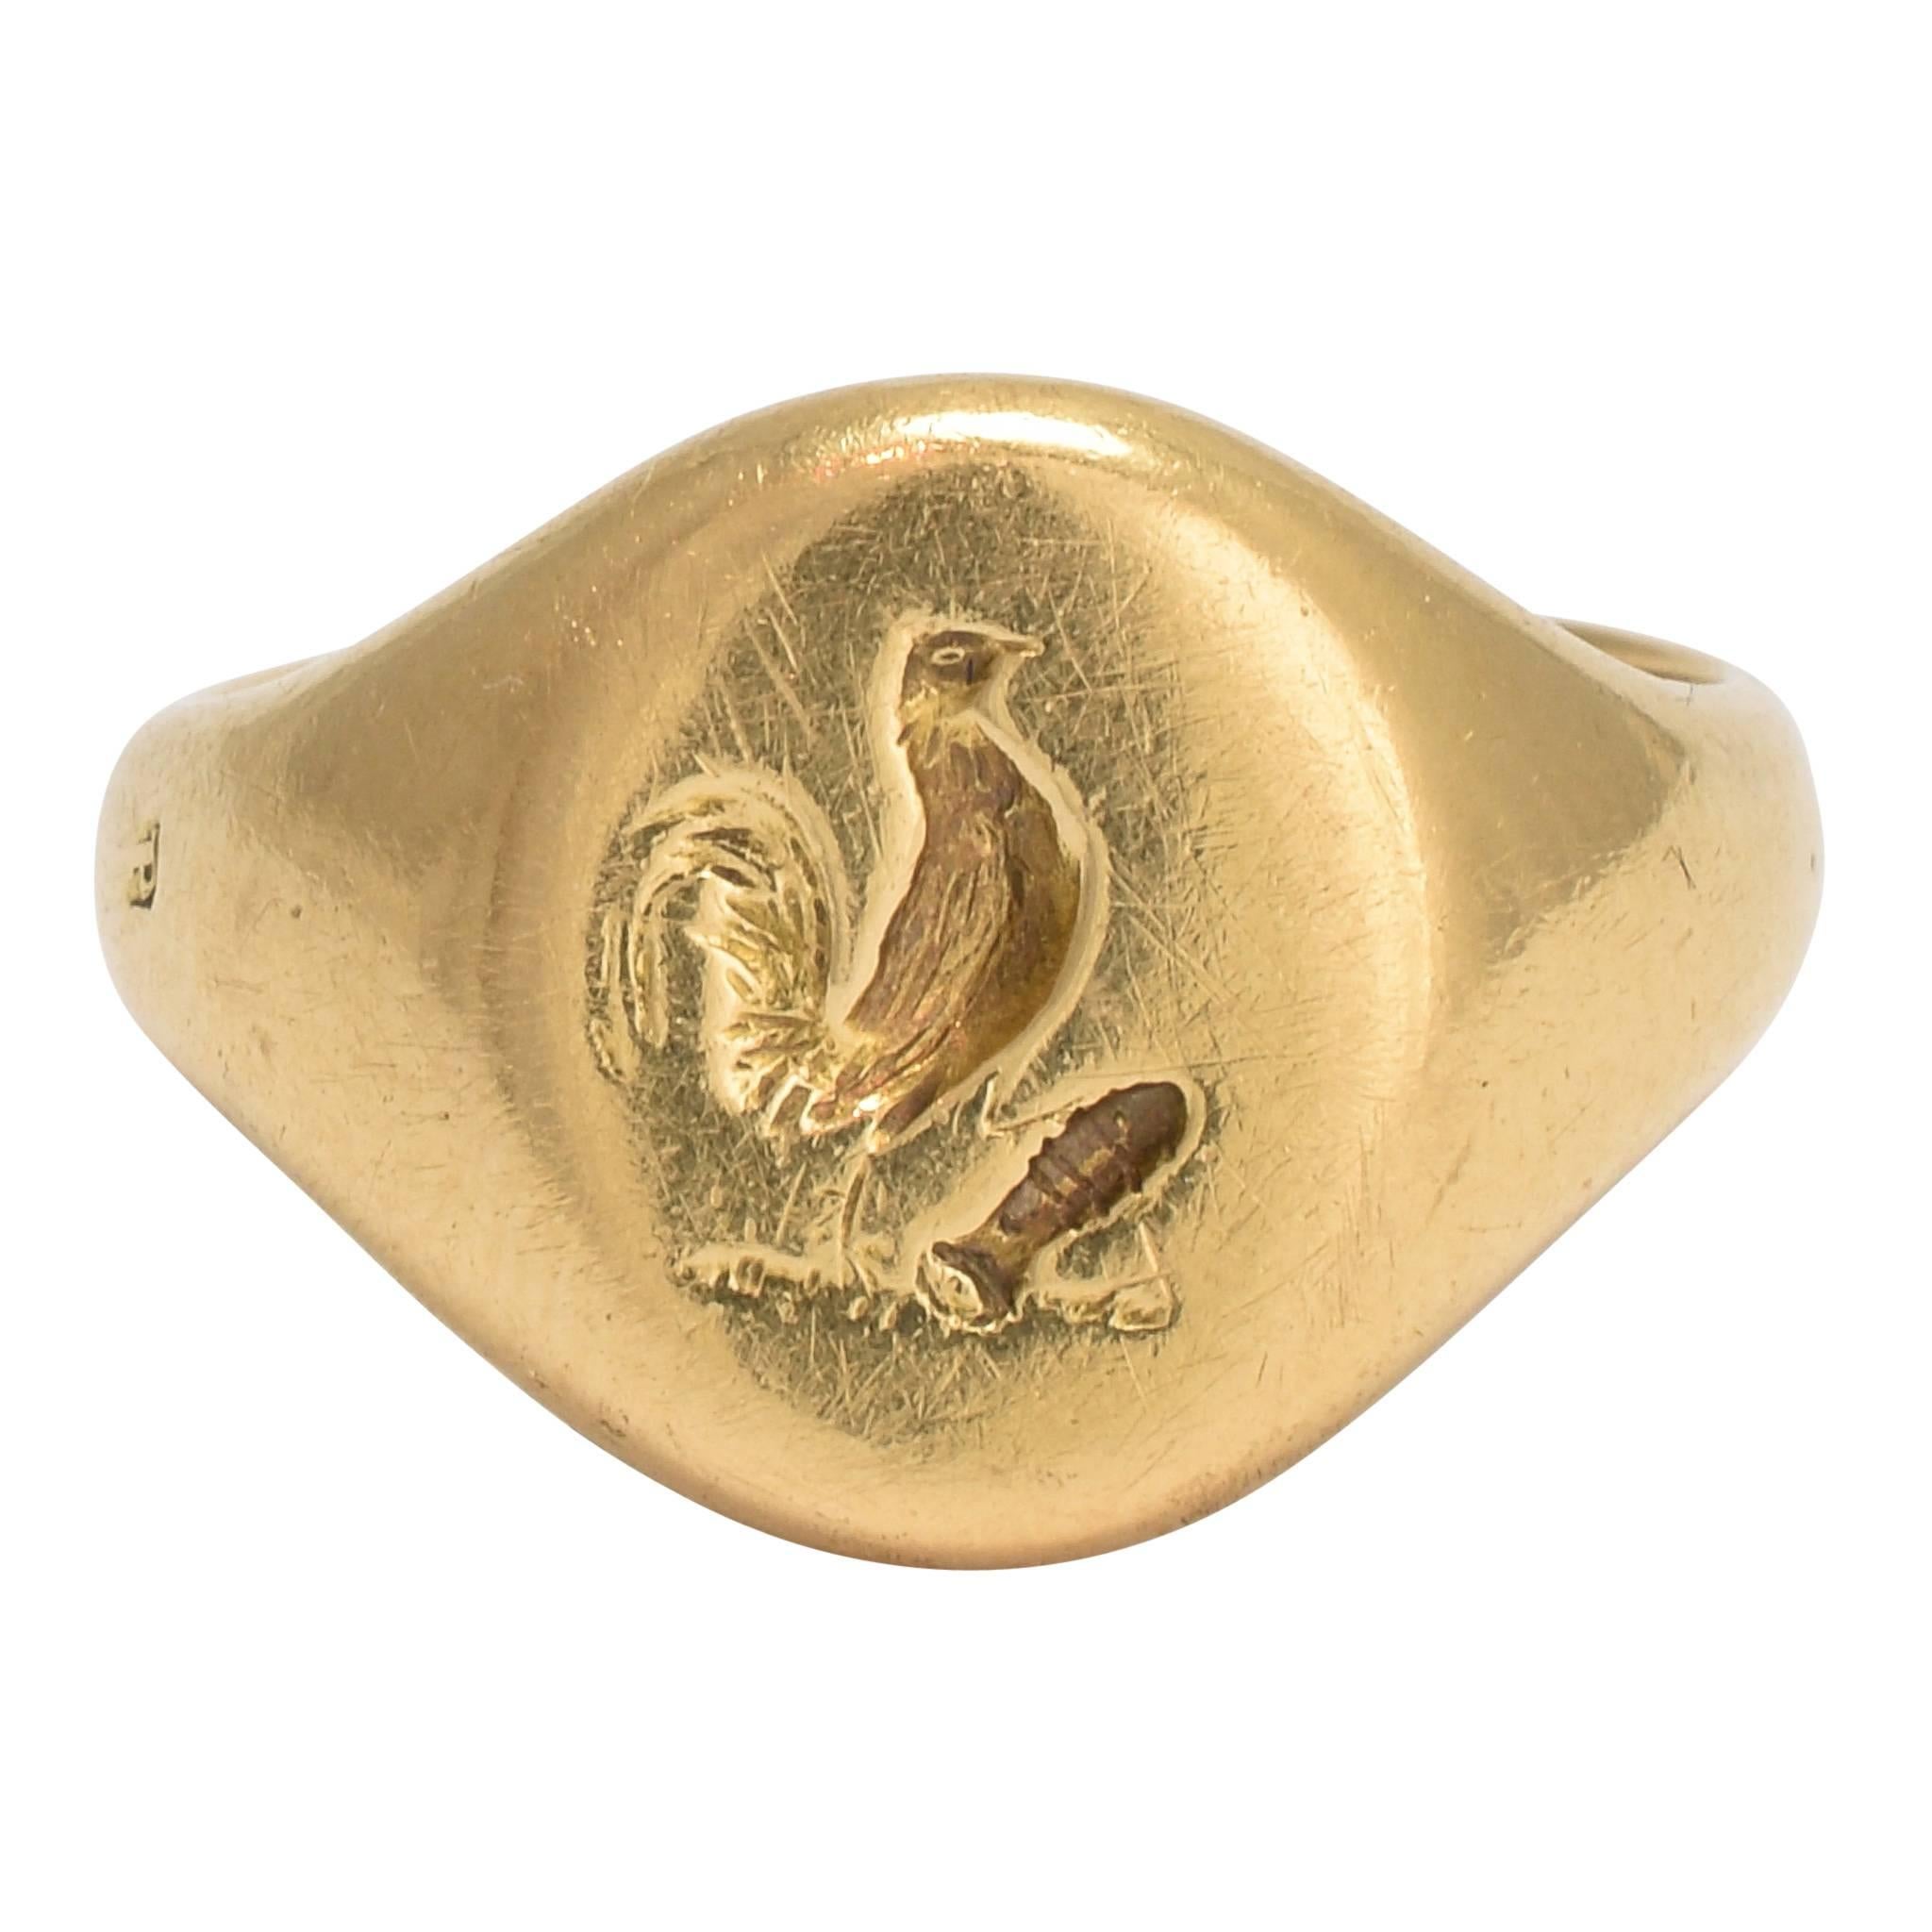 Antique Edwardian Rooster Intaglio Gold Signet Ring